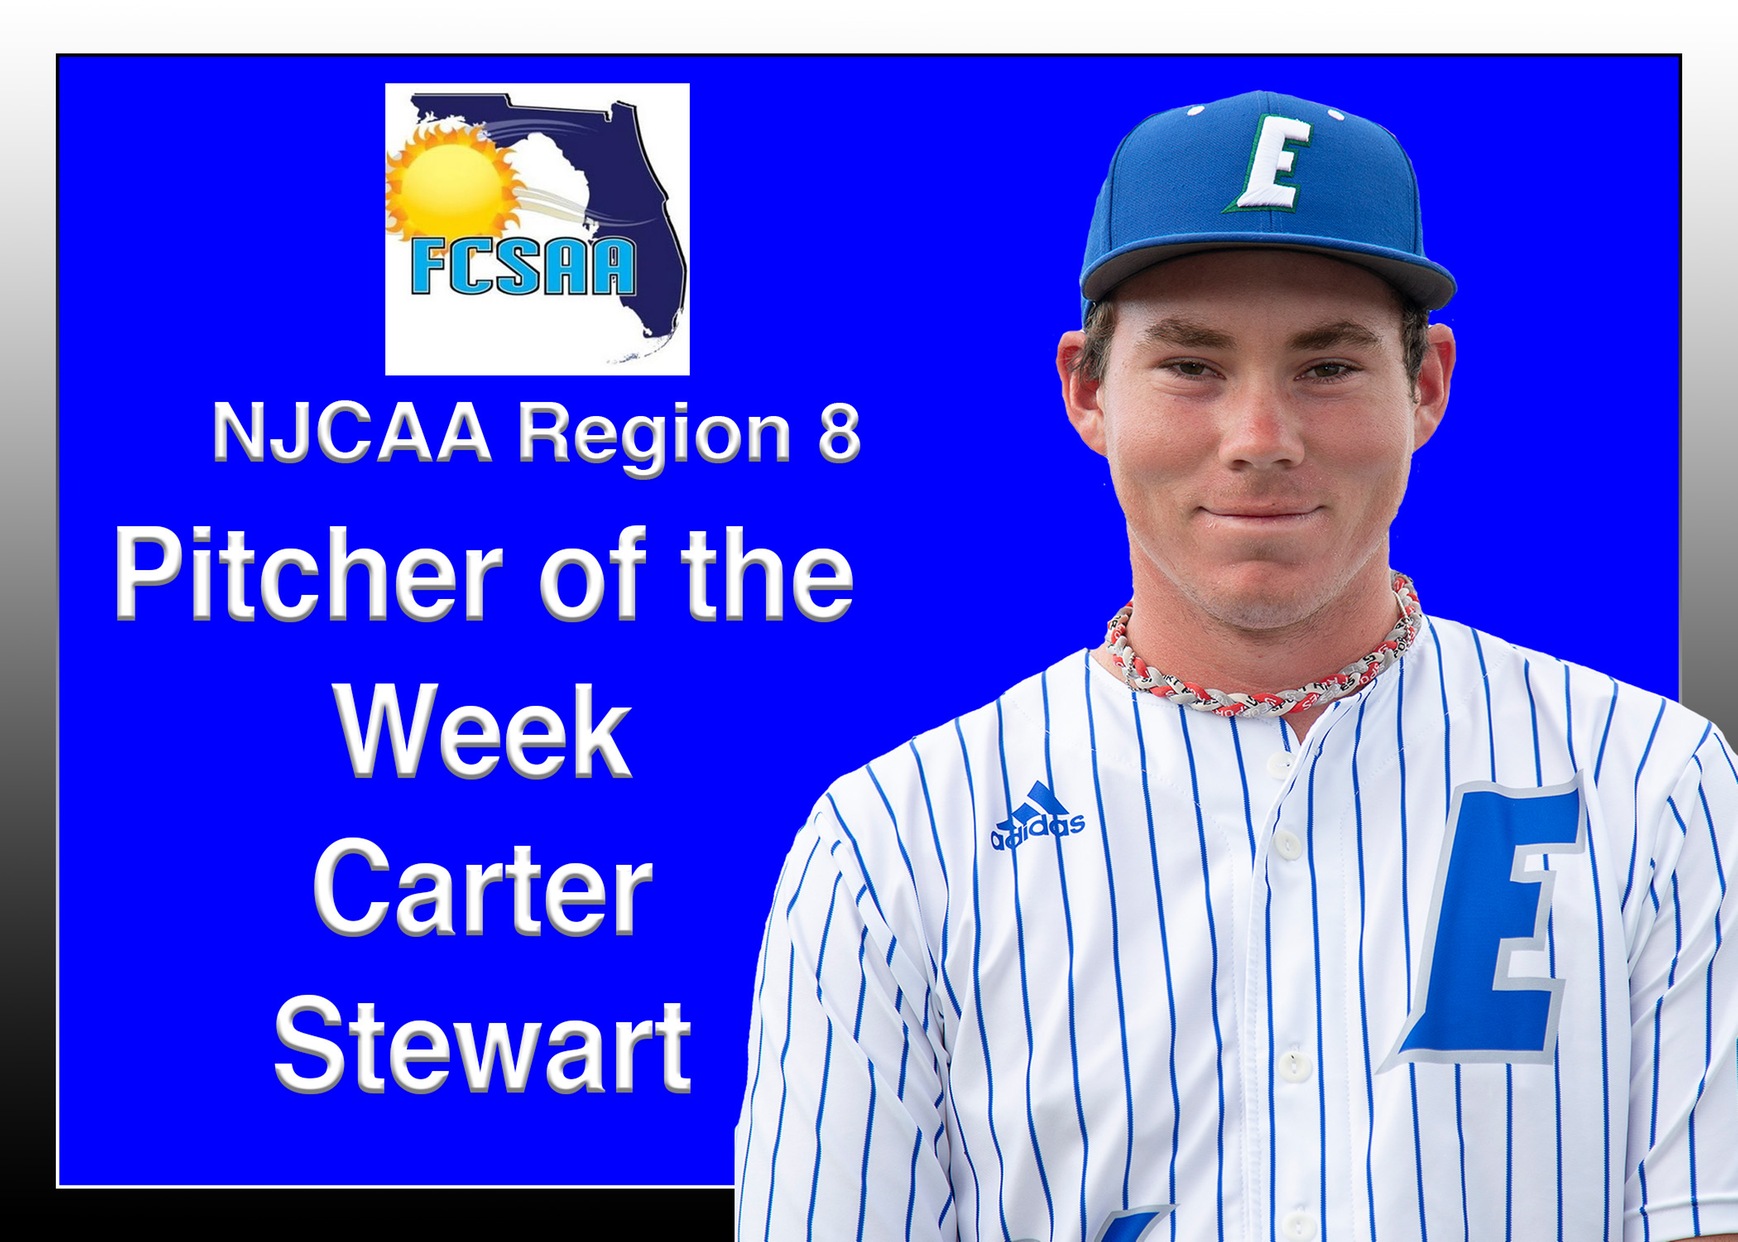 Carter Stewart named NJCAA Region 8 Pitcher of the Week